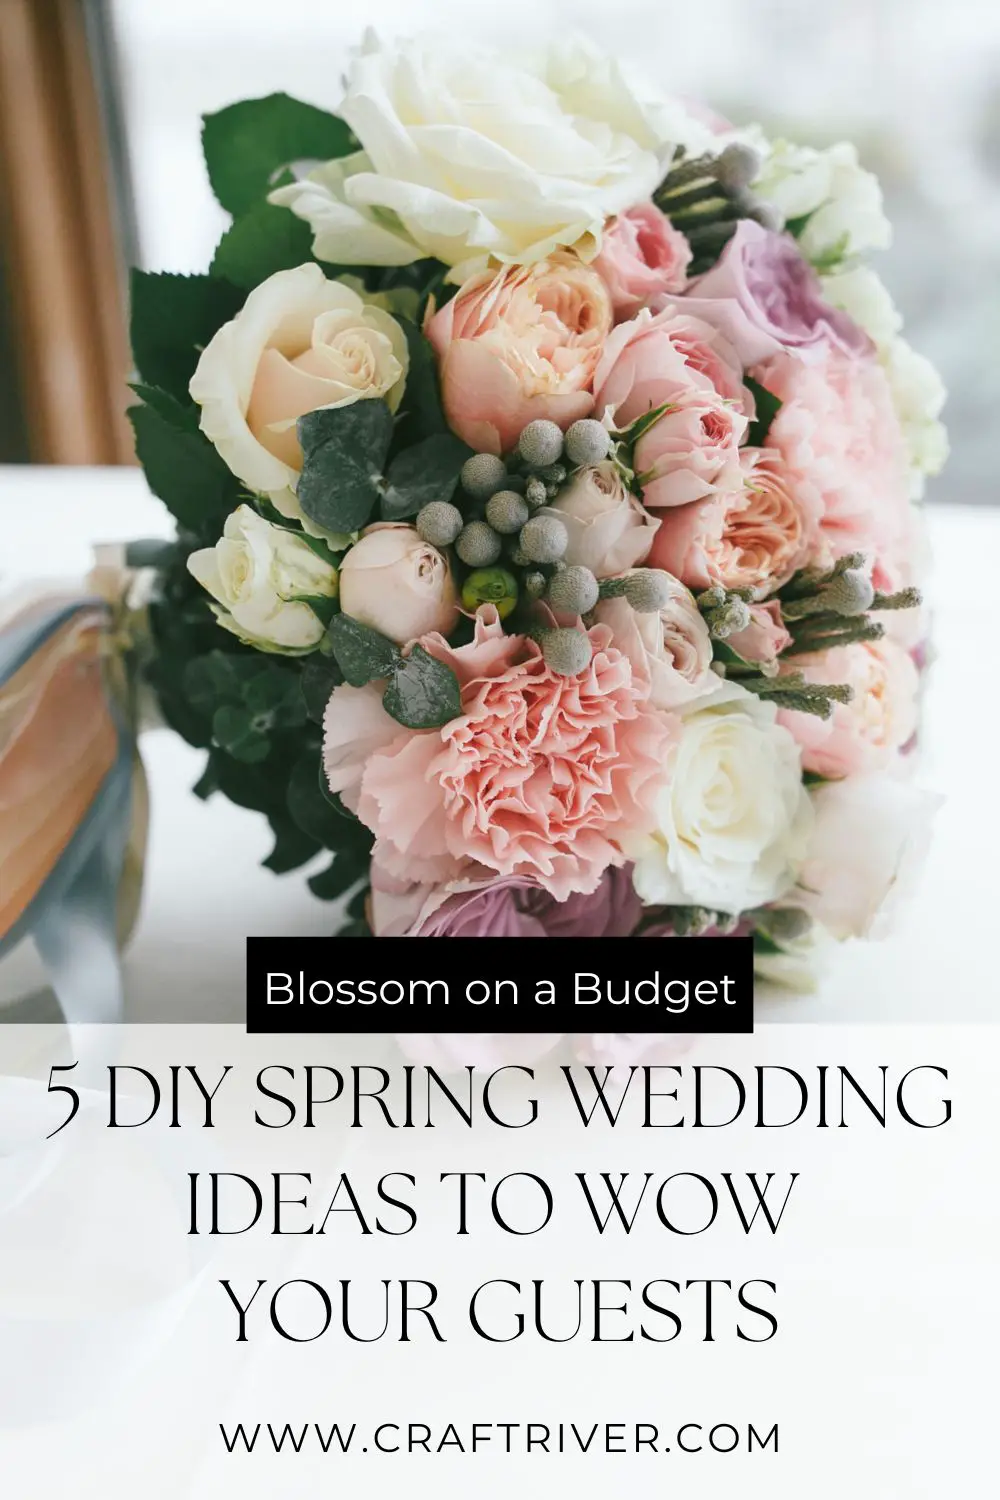 DIY Spring Wedding Ideas